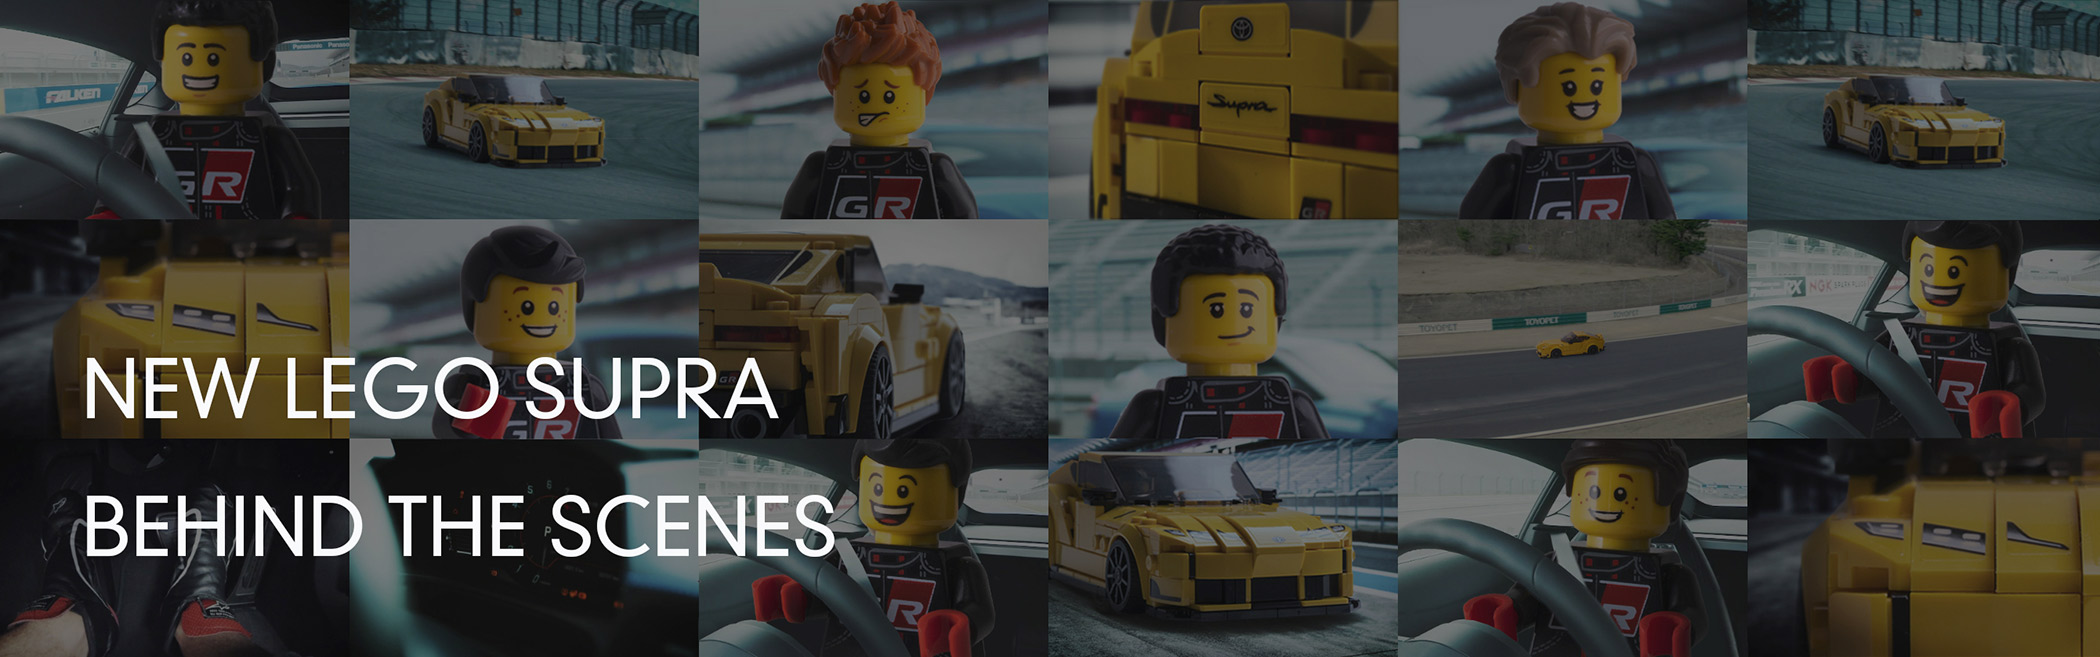 NEW LEGO SUPRA BEHIND THE SCENES